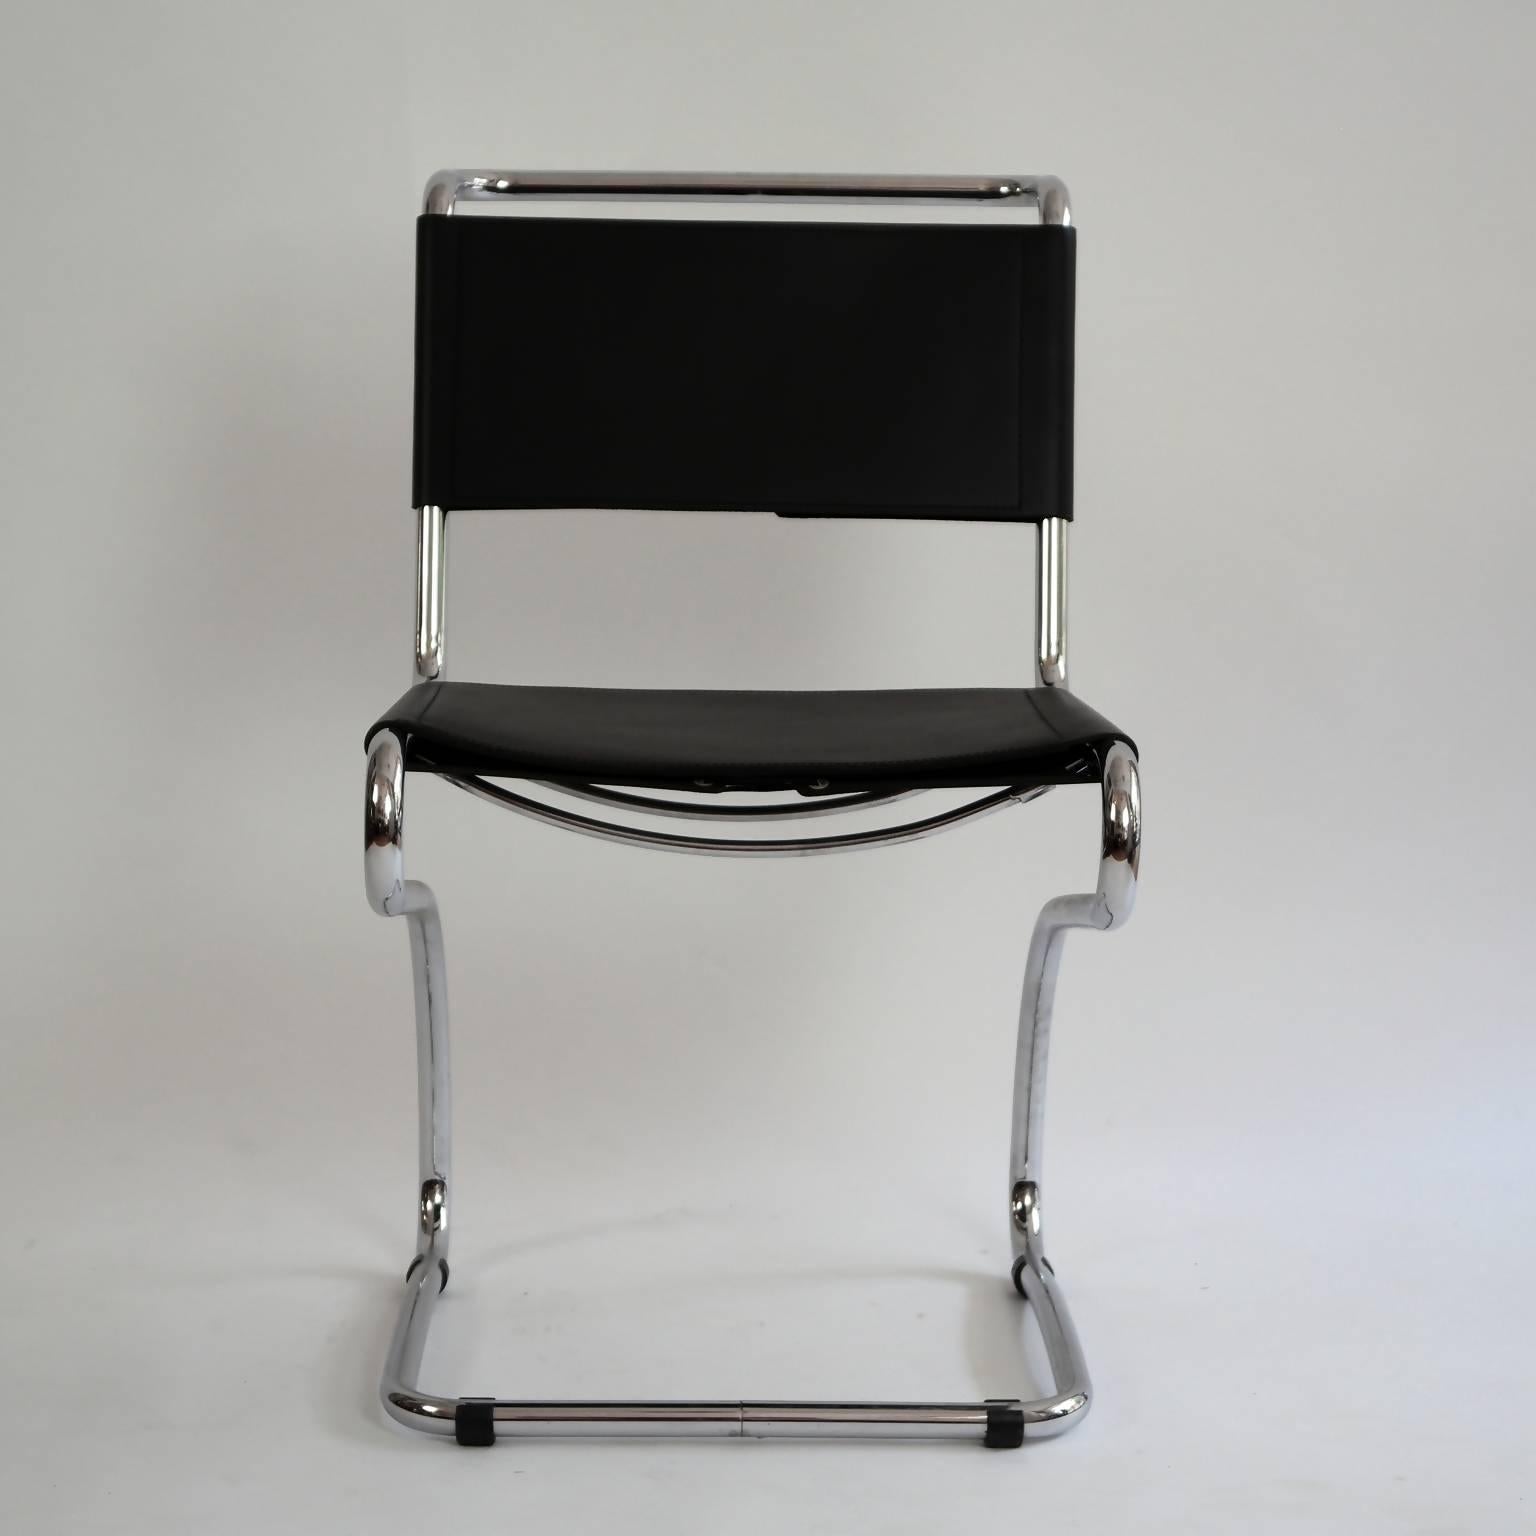 A beautiful steel tube chair designed by Jindrich Halabala.